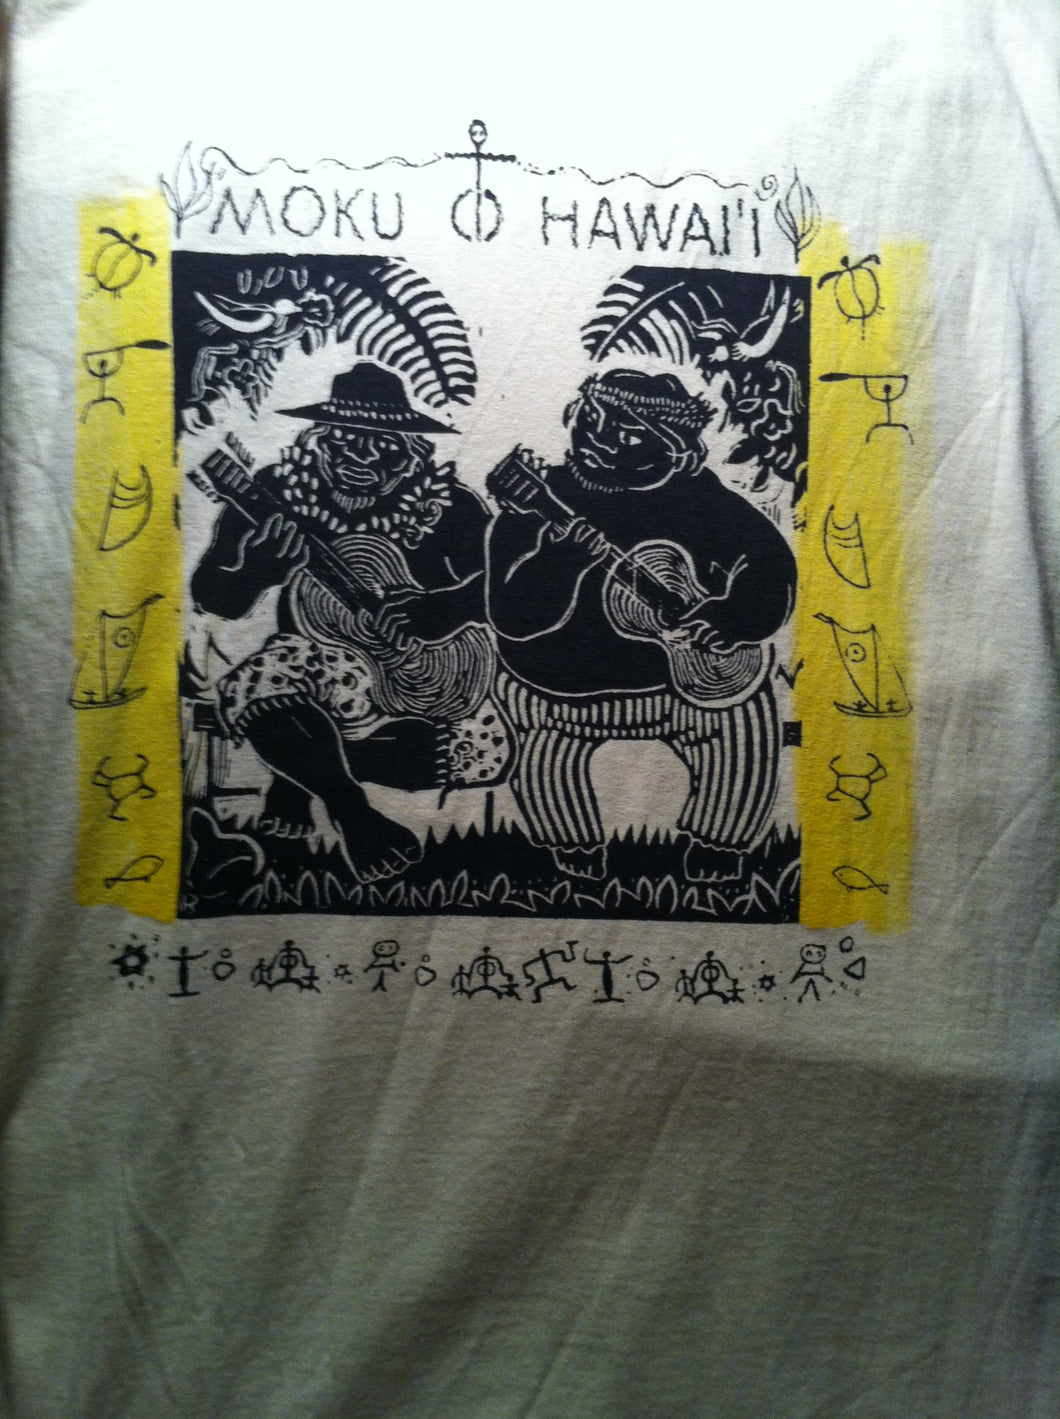 Moku o Hawaii - a hand printed and hand colored shirt